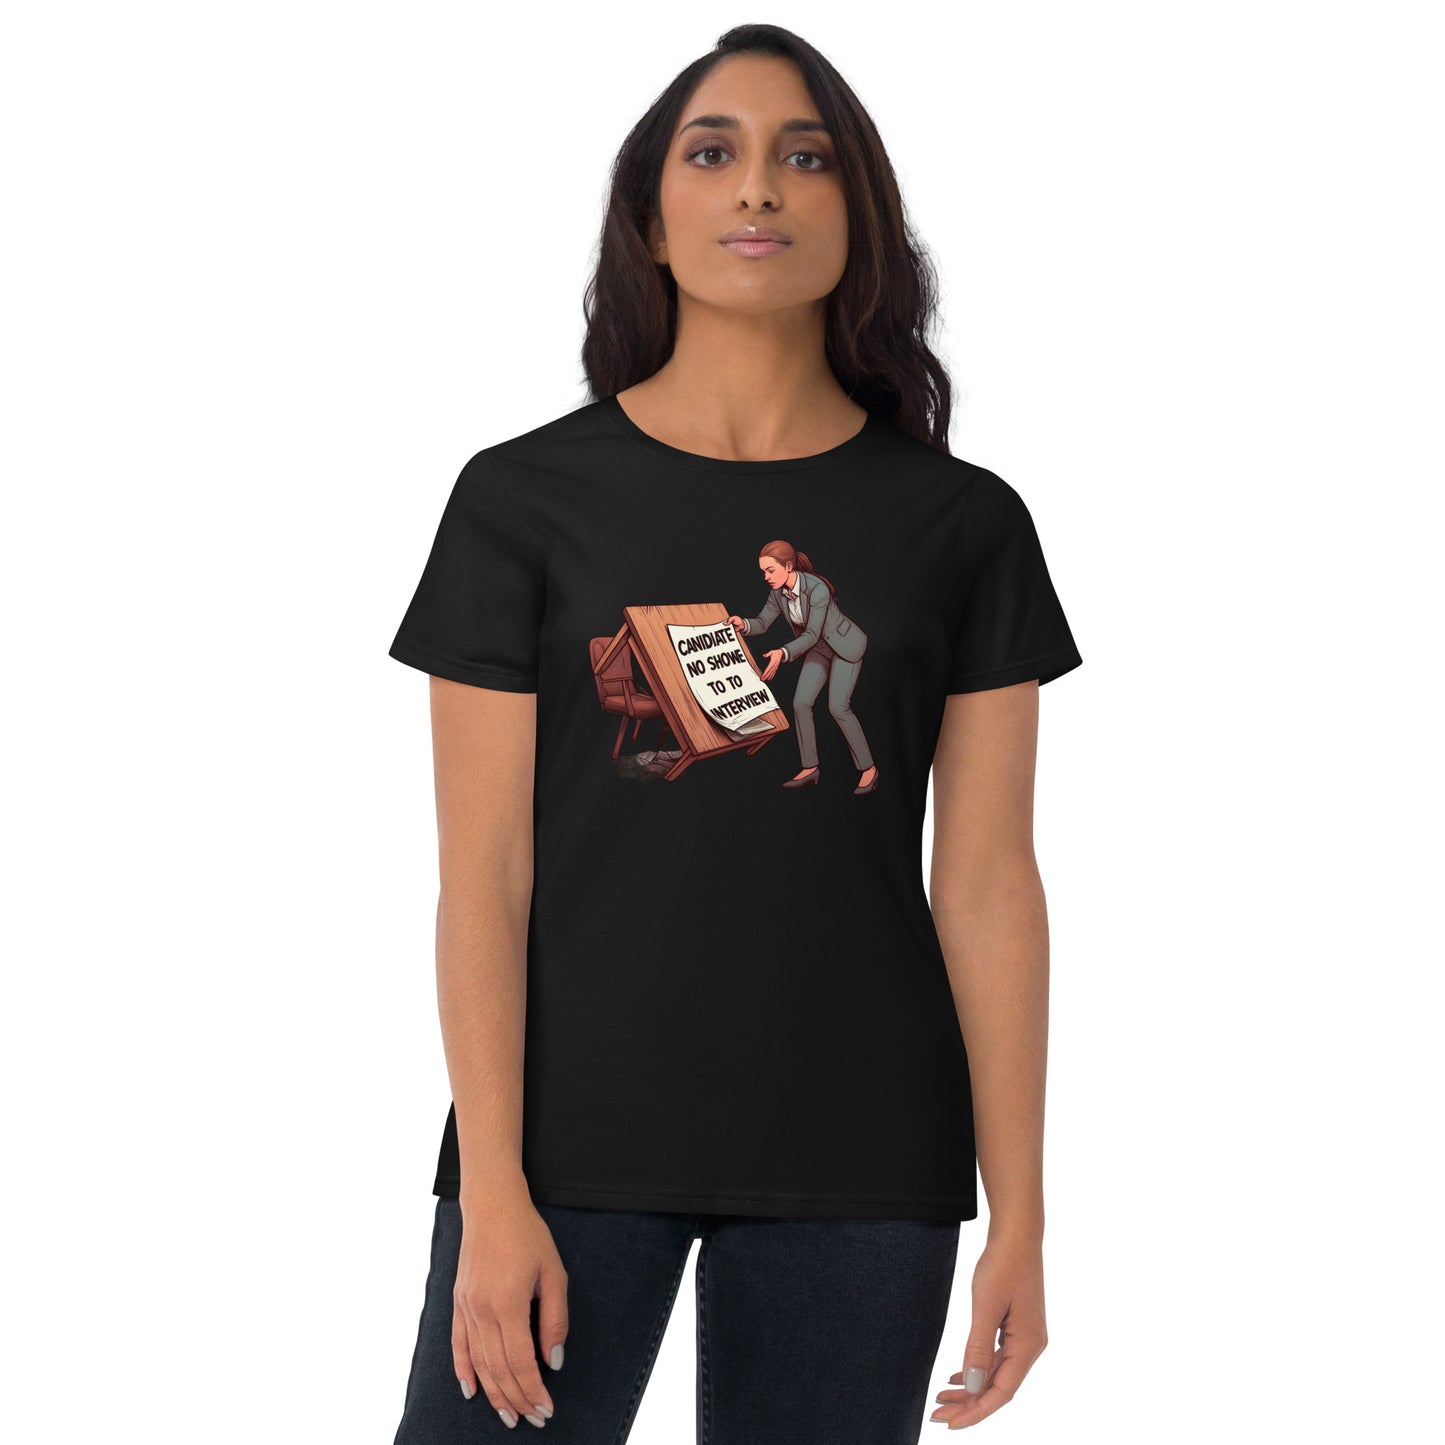 Candidate No Show Women's short sleeve t-shirt - Dark